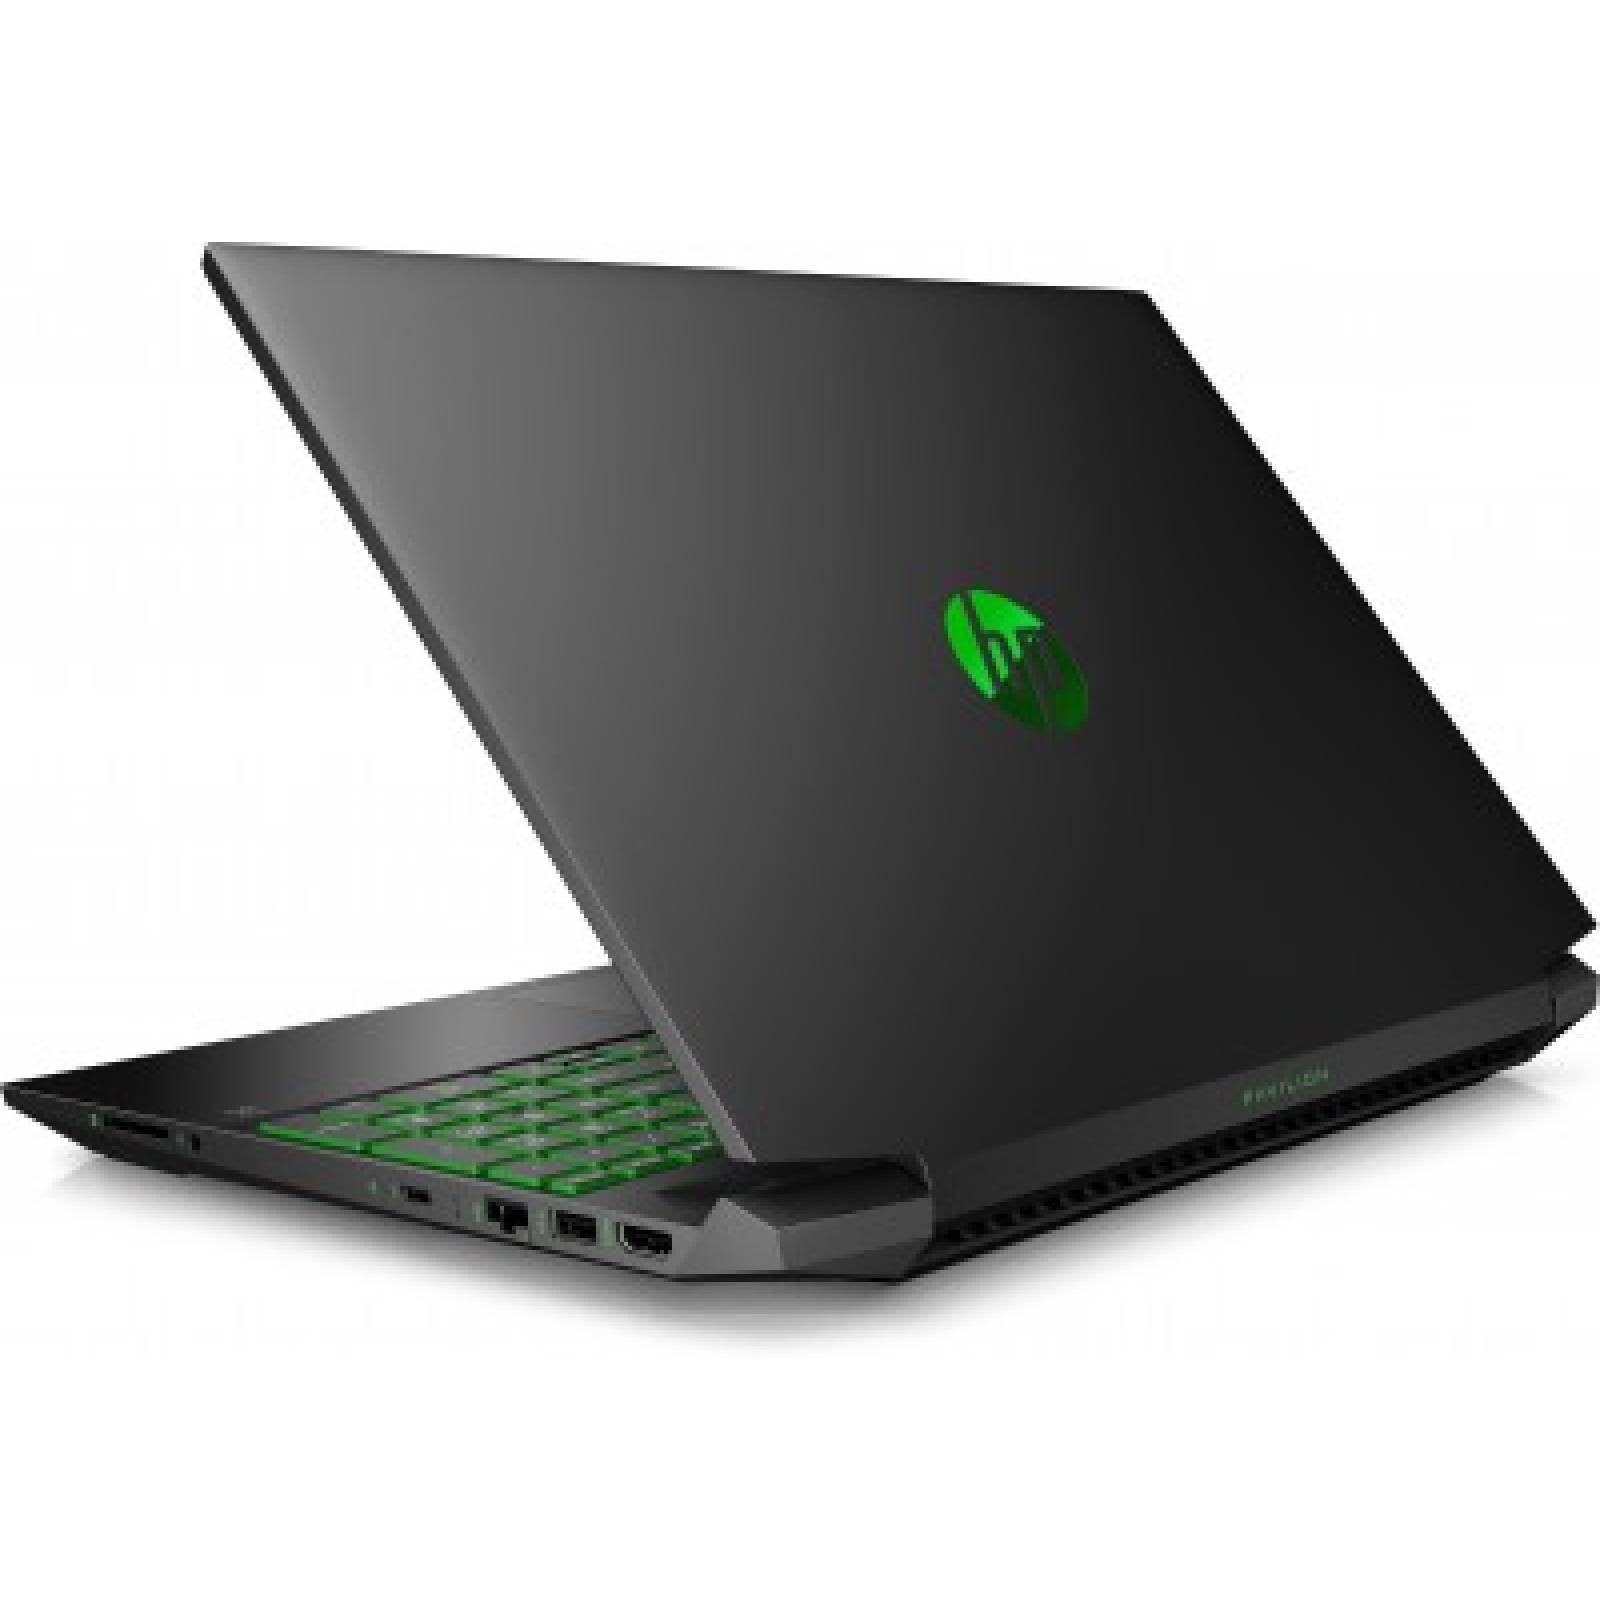 HP Laptop Gamer 15 pulgadas AMD Ryzen 5 8 GB Win 10 1 TB 